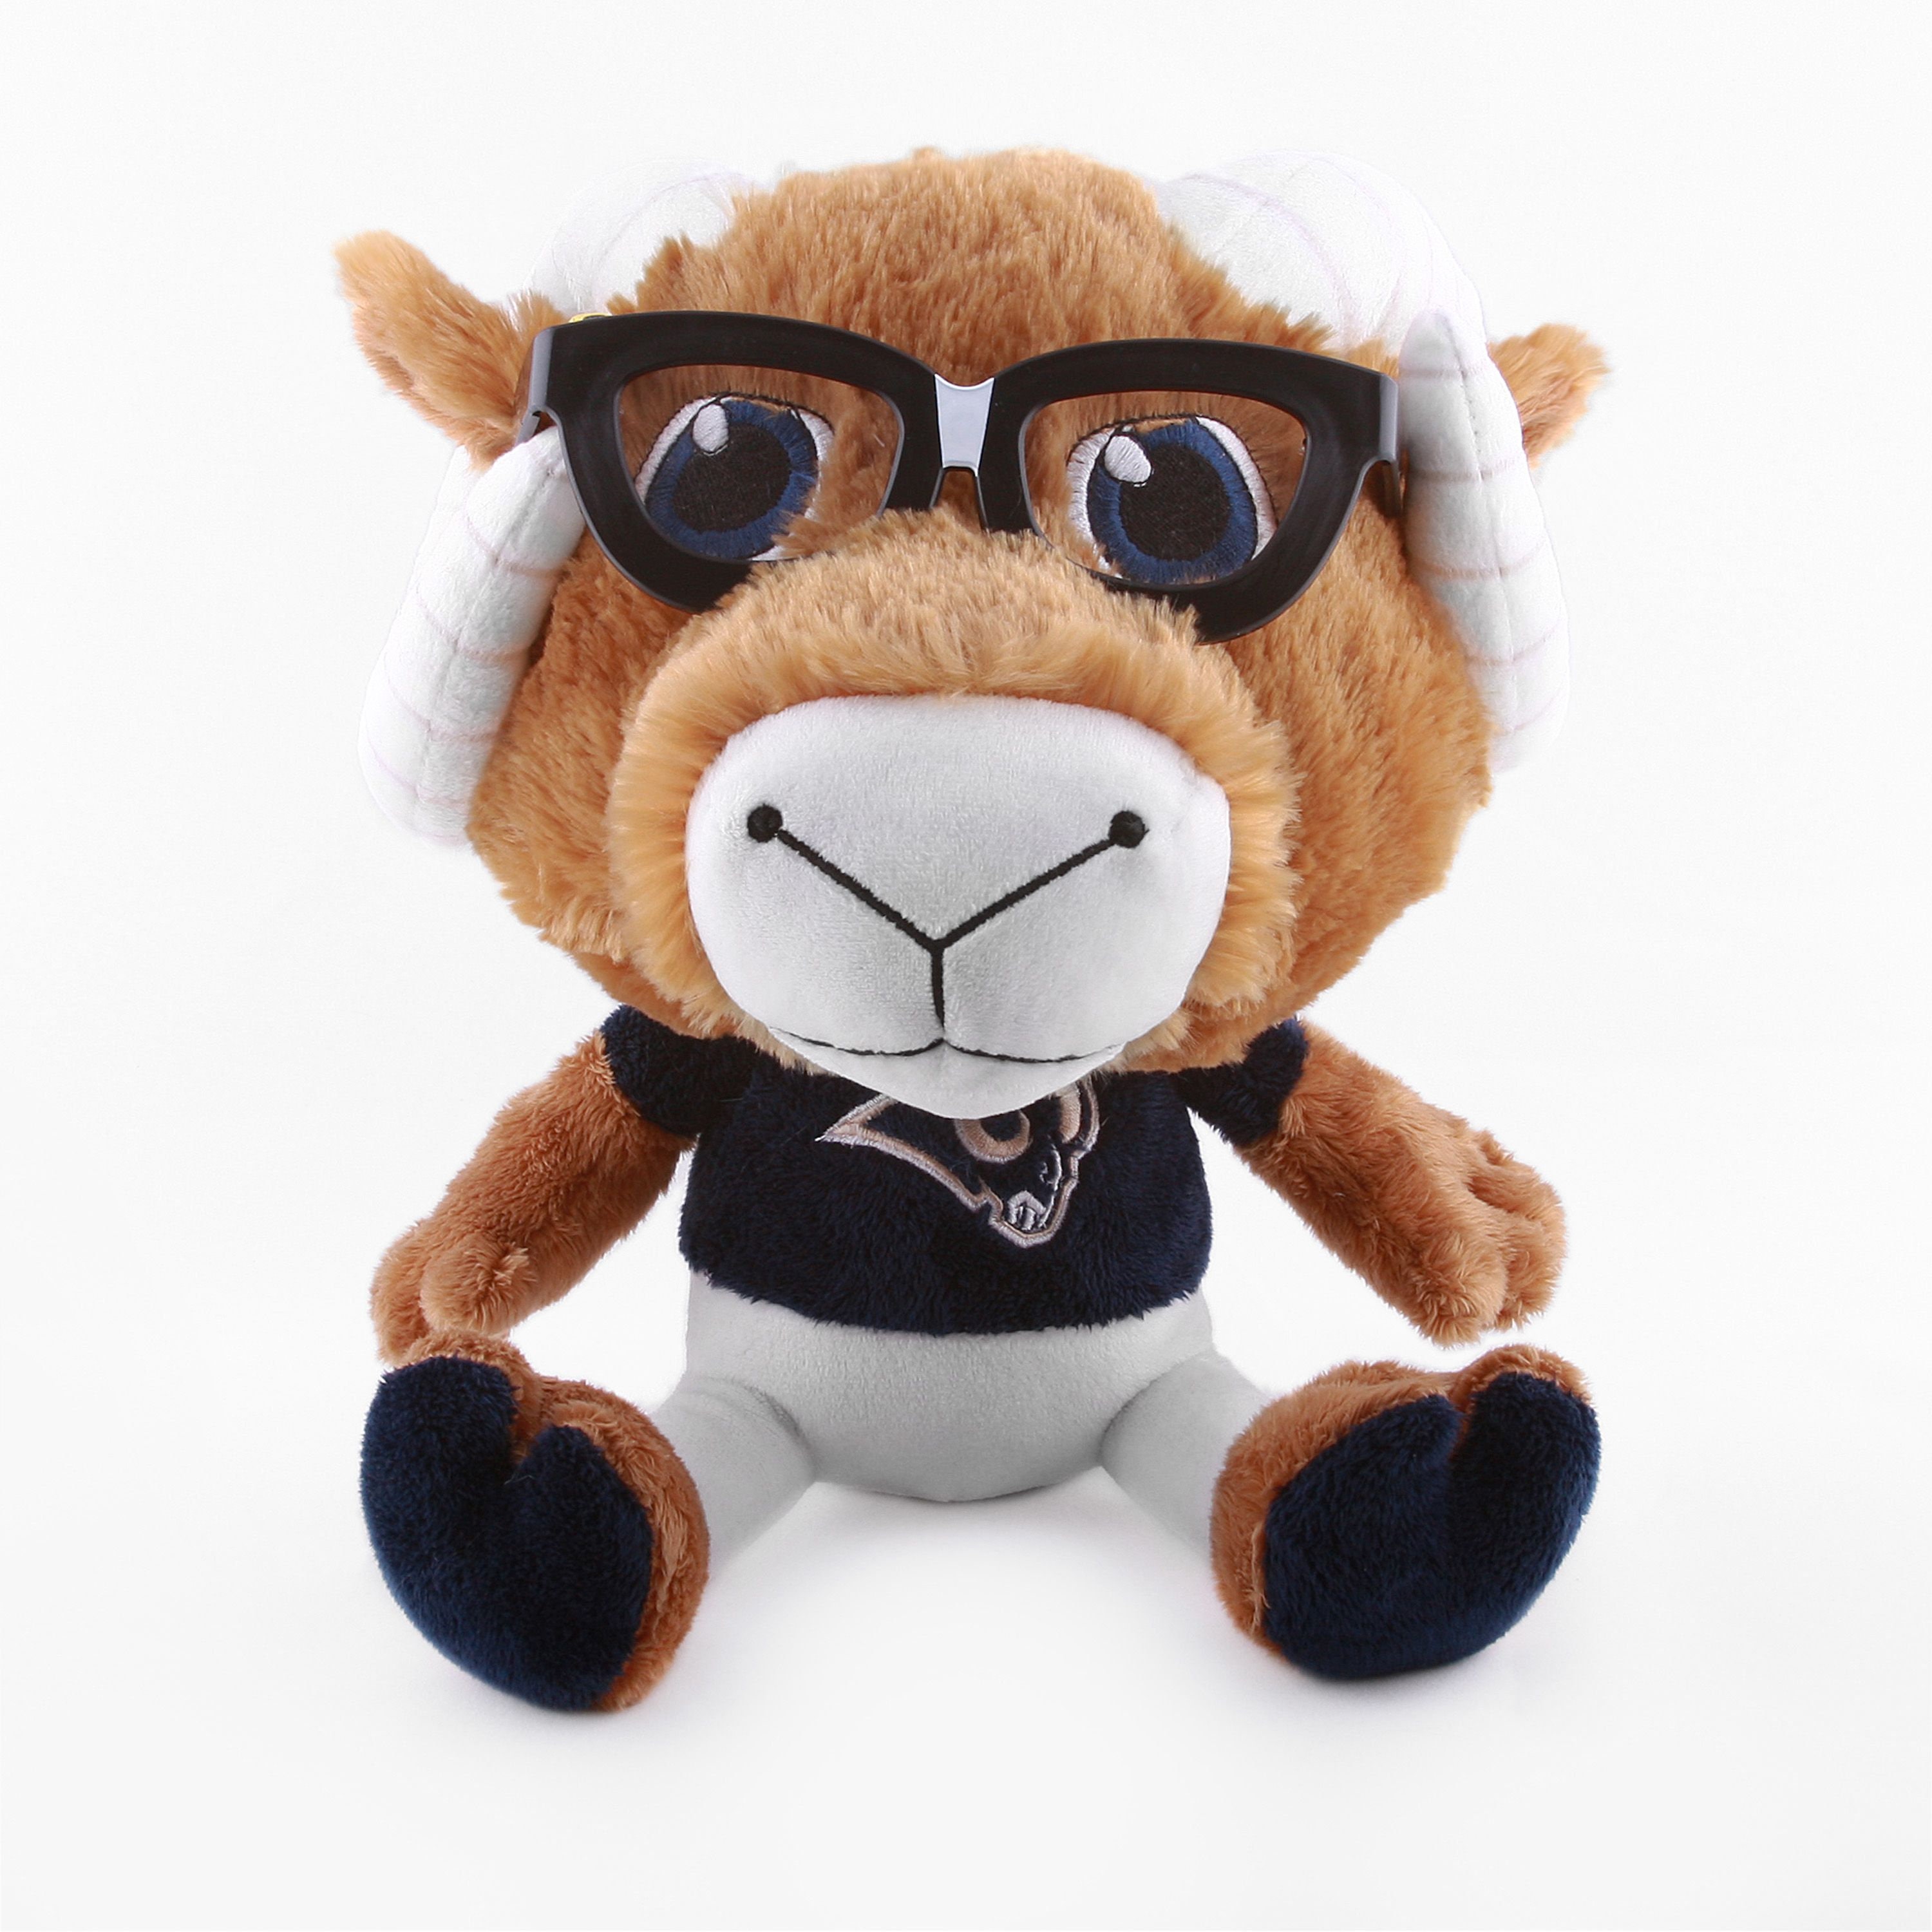 Saint Louis Rams Study Buddy-Officially Licensed Nfl Plush Mascot Stuffed Animal